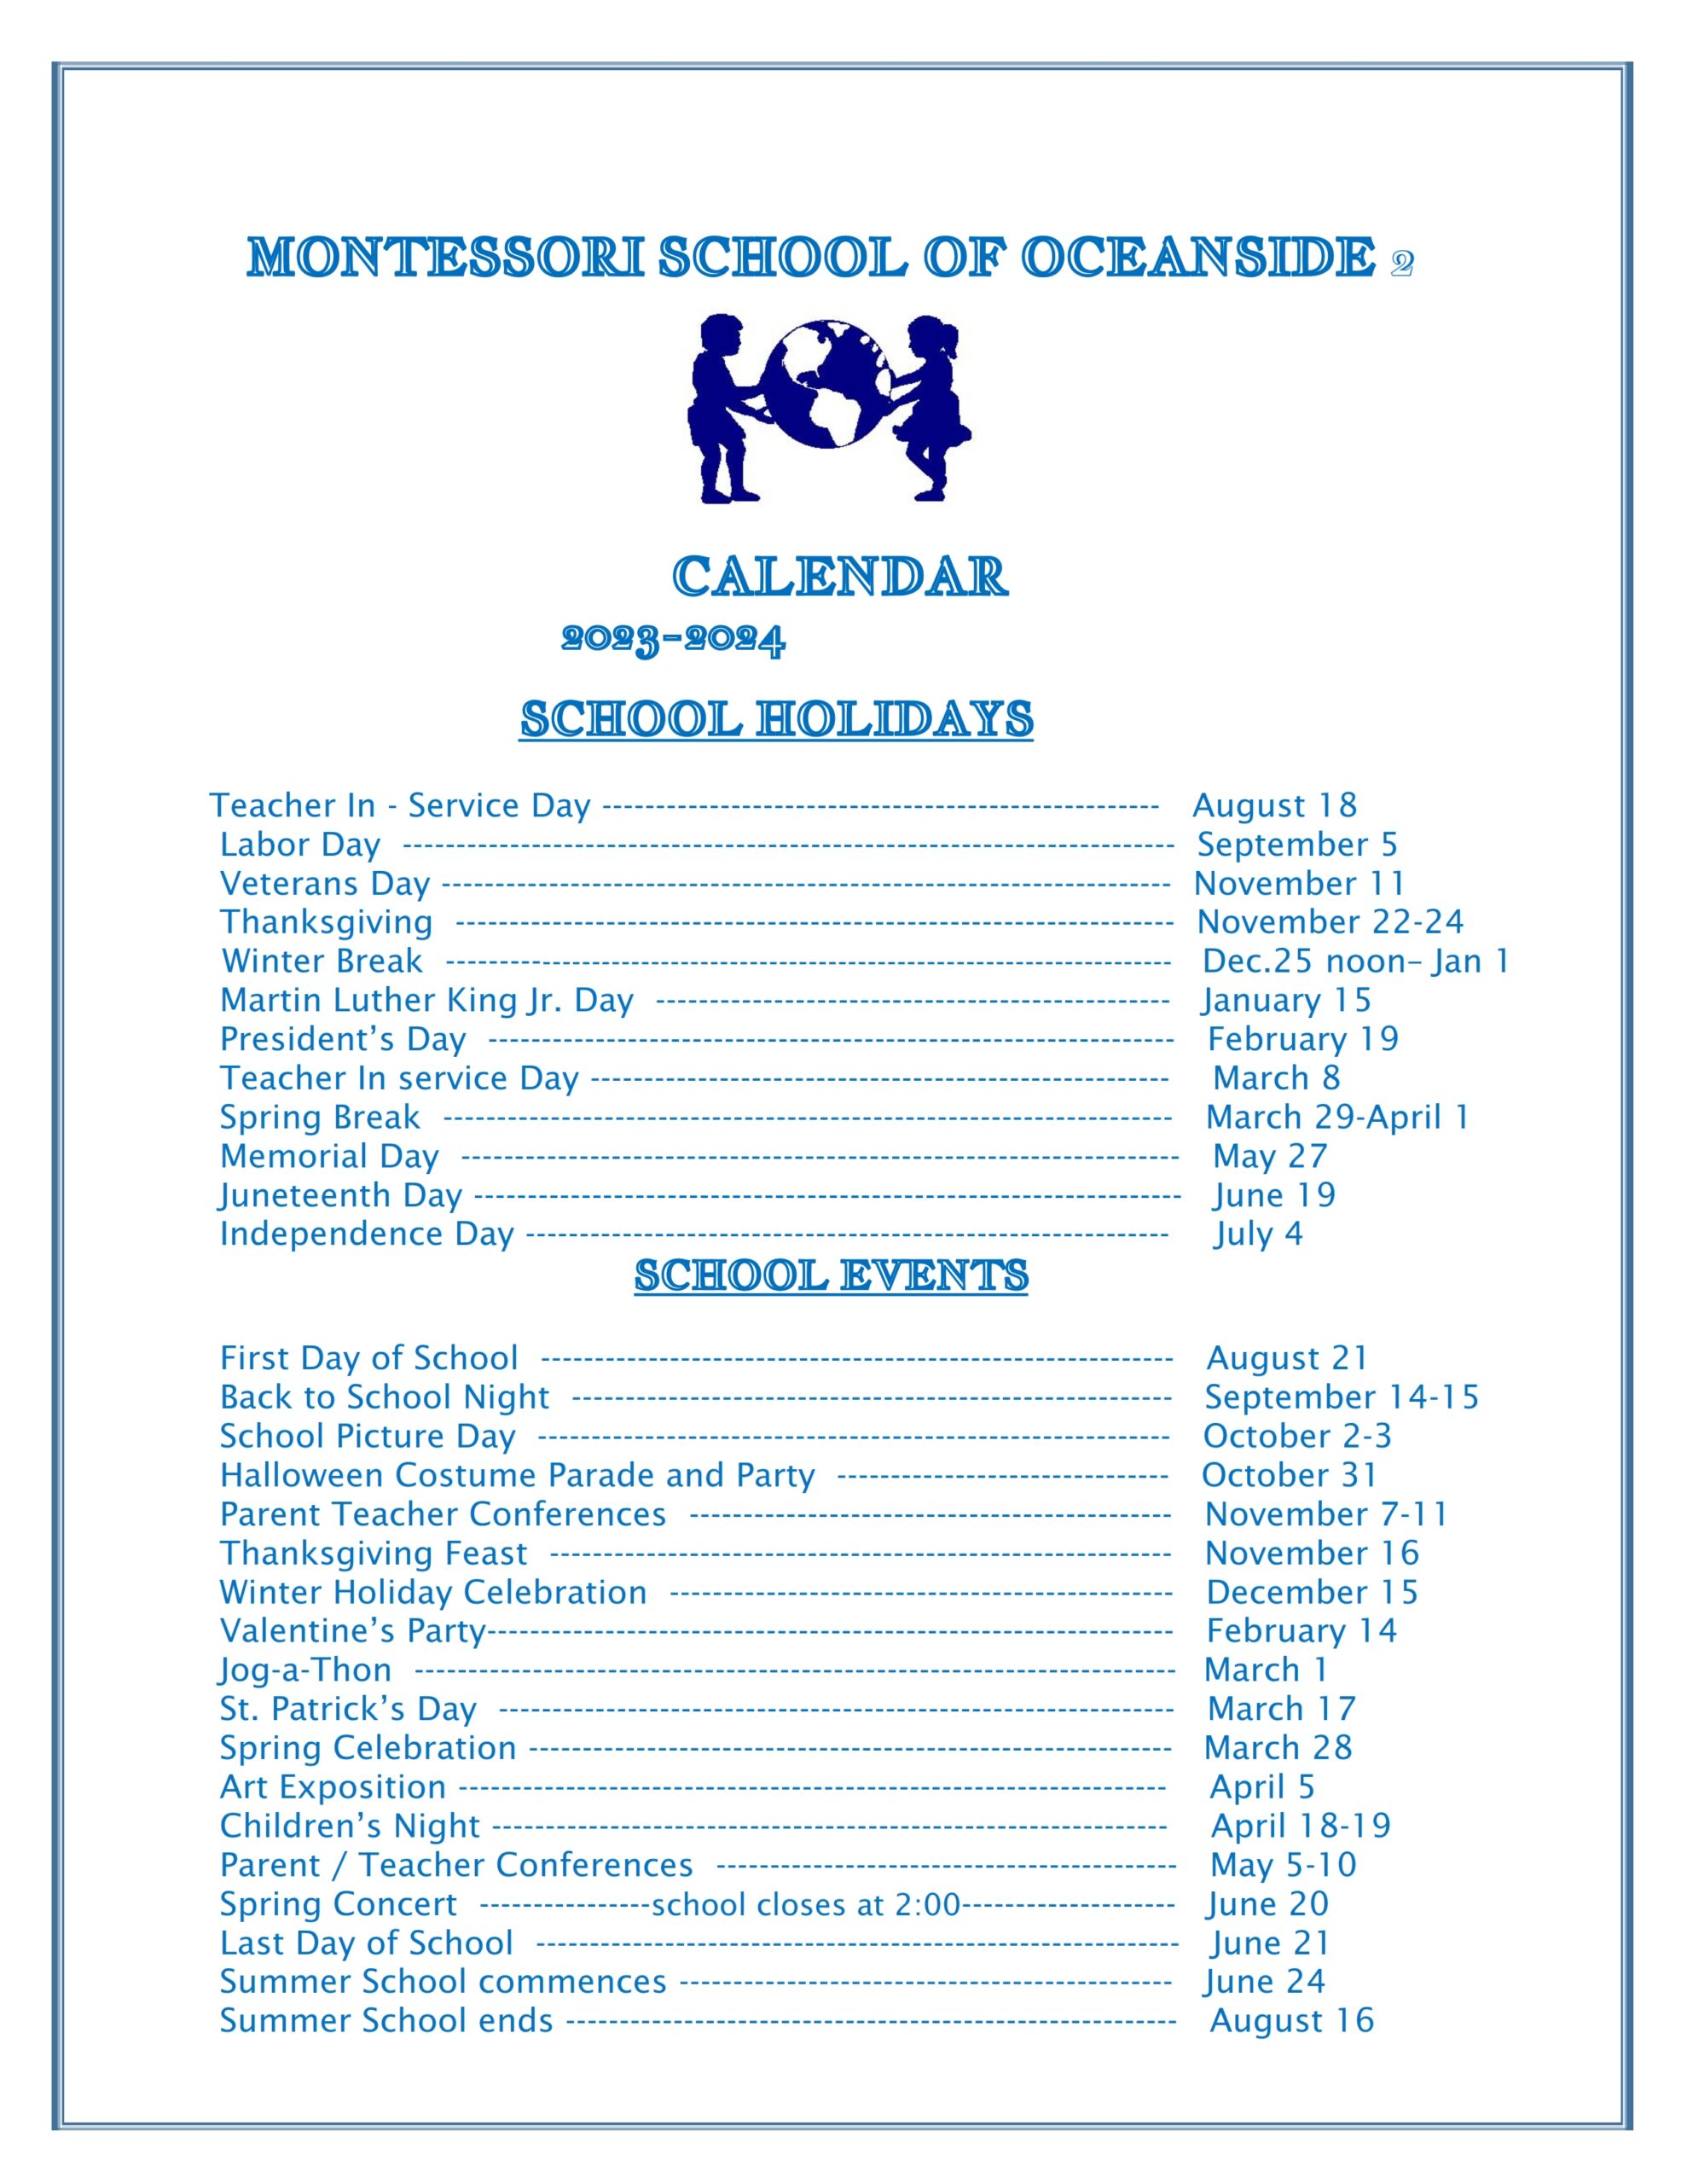 Calendar Montessori School of Oceanside 2